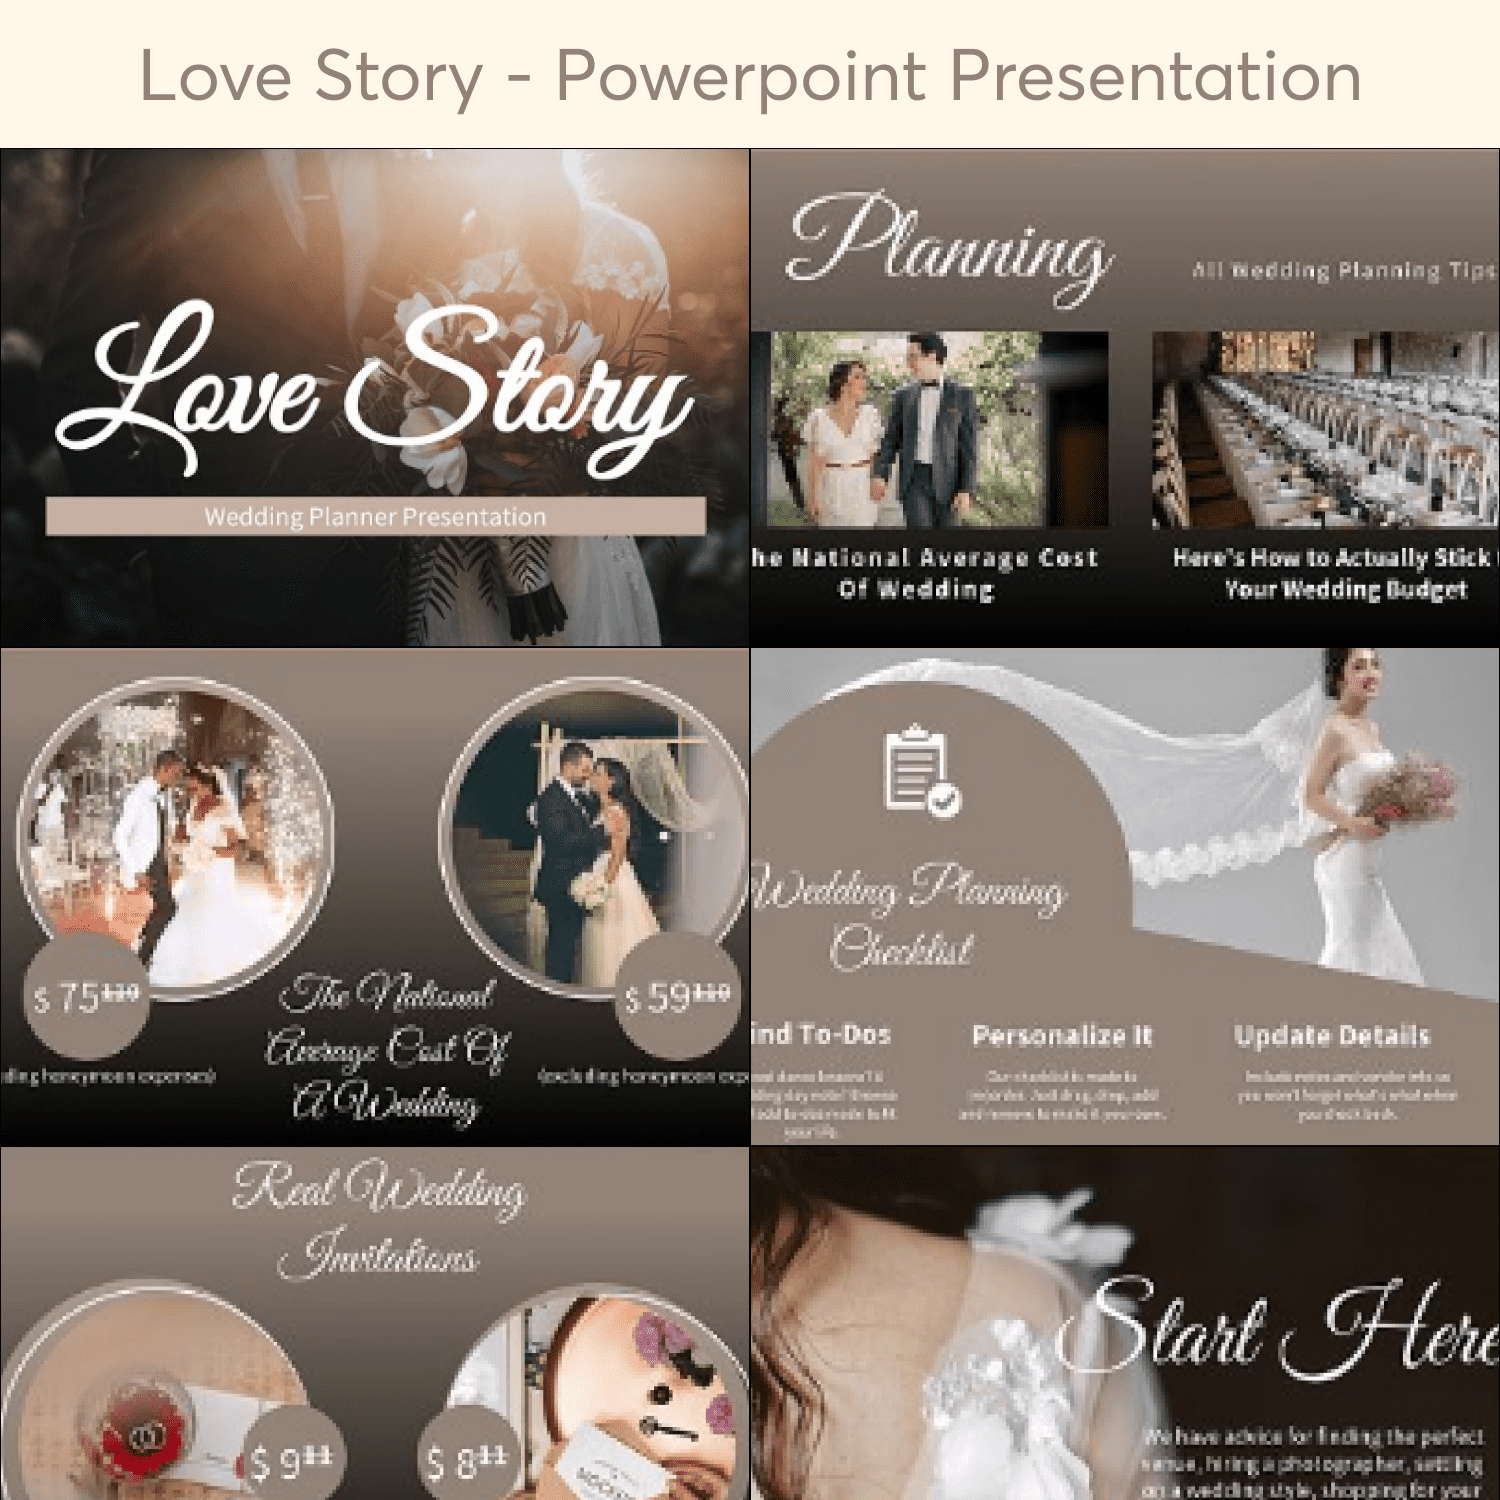 Love Story - Powerpoint Presentation.